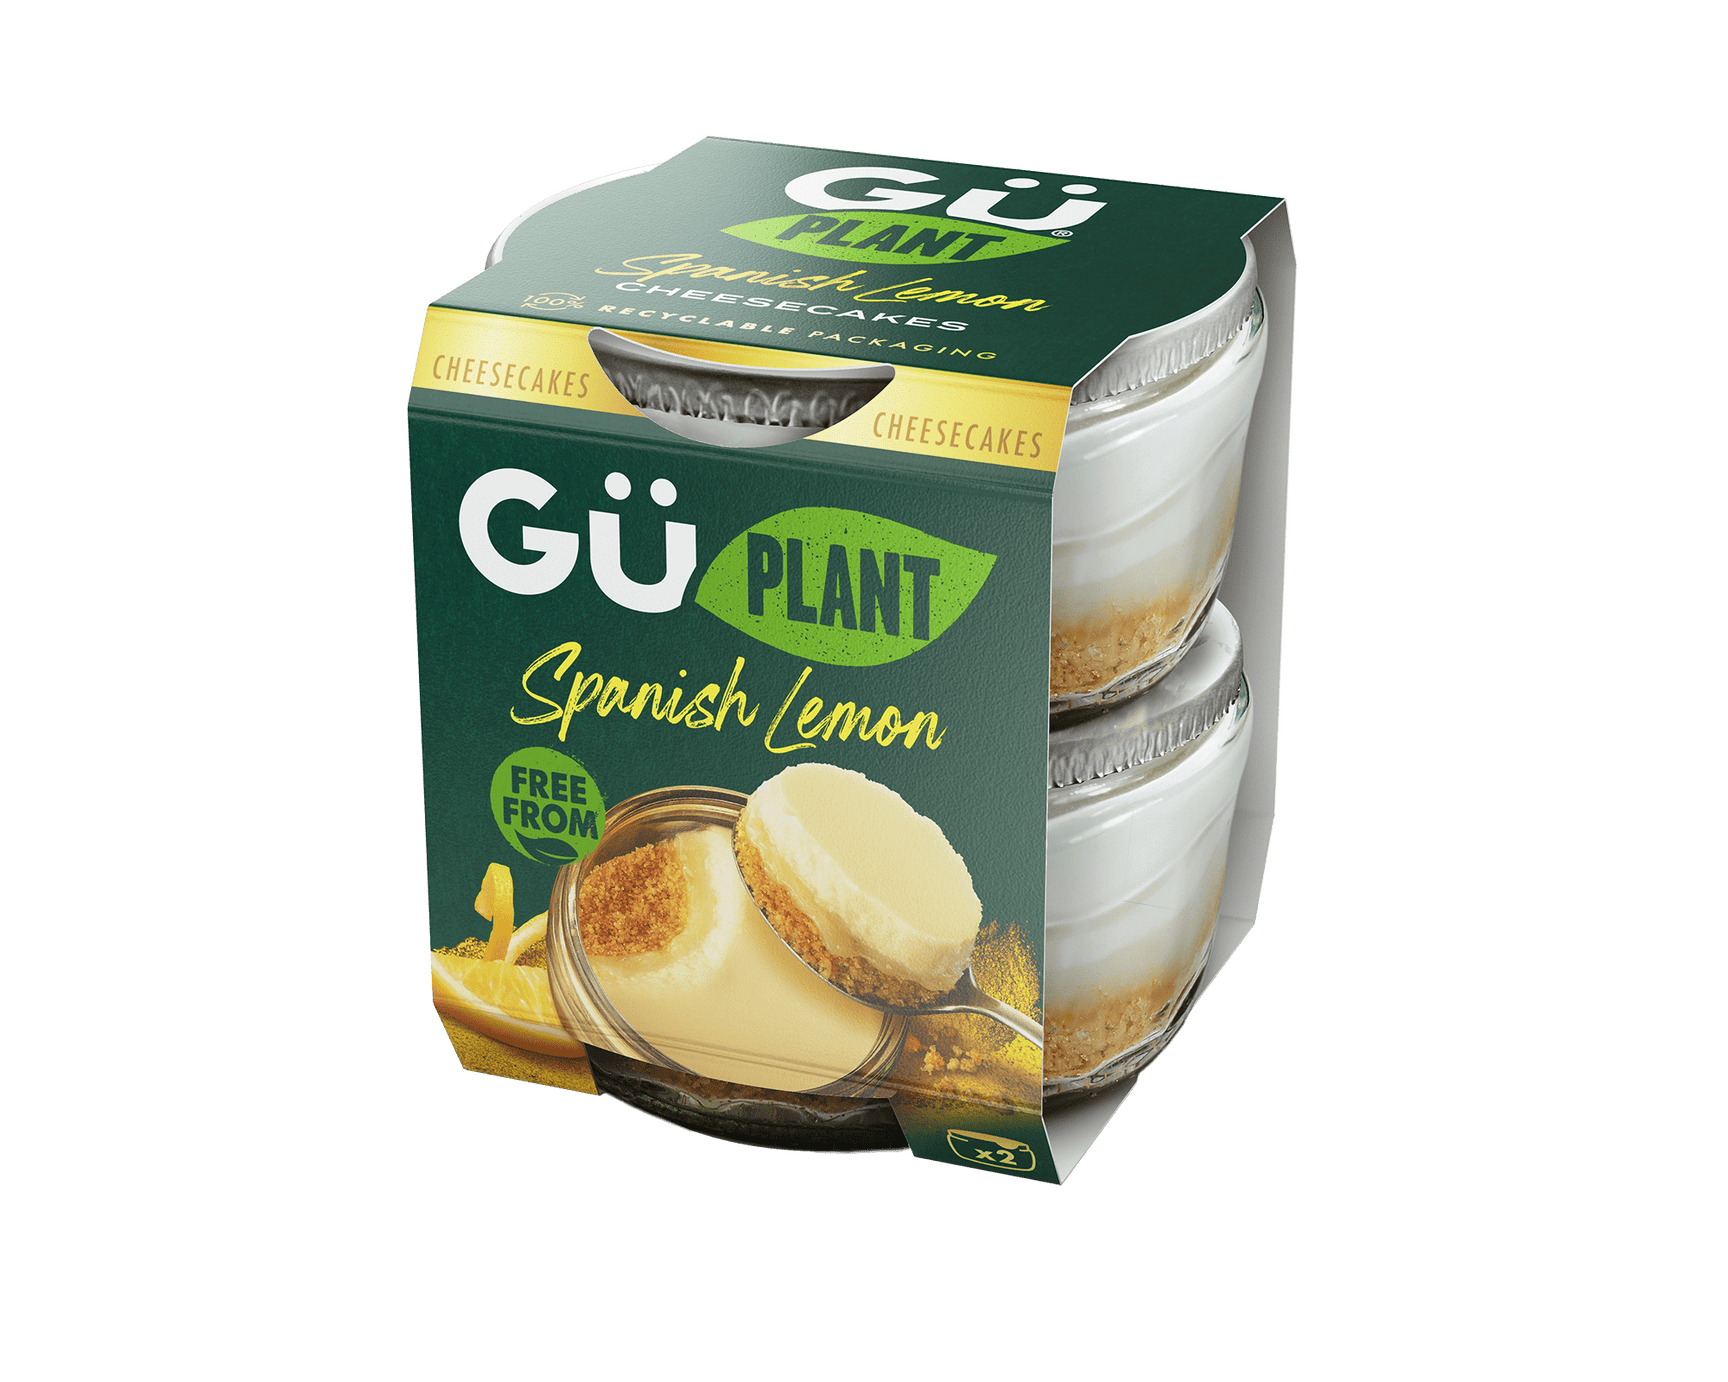 pack Gu plant lemon cheesecake